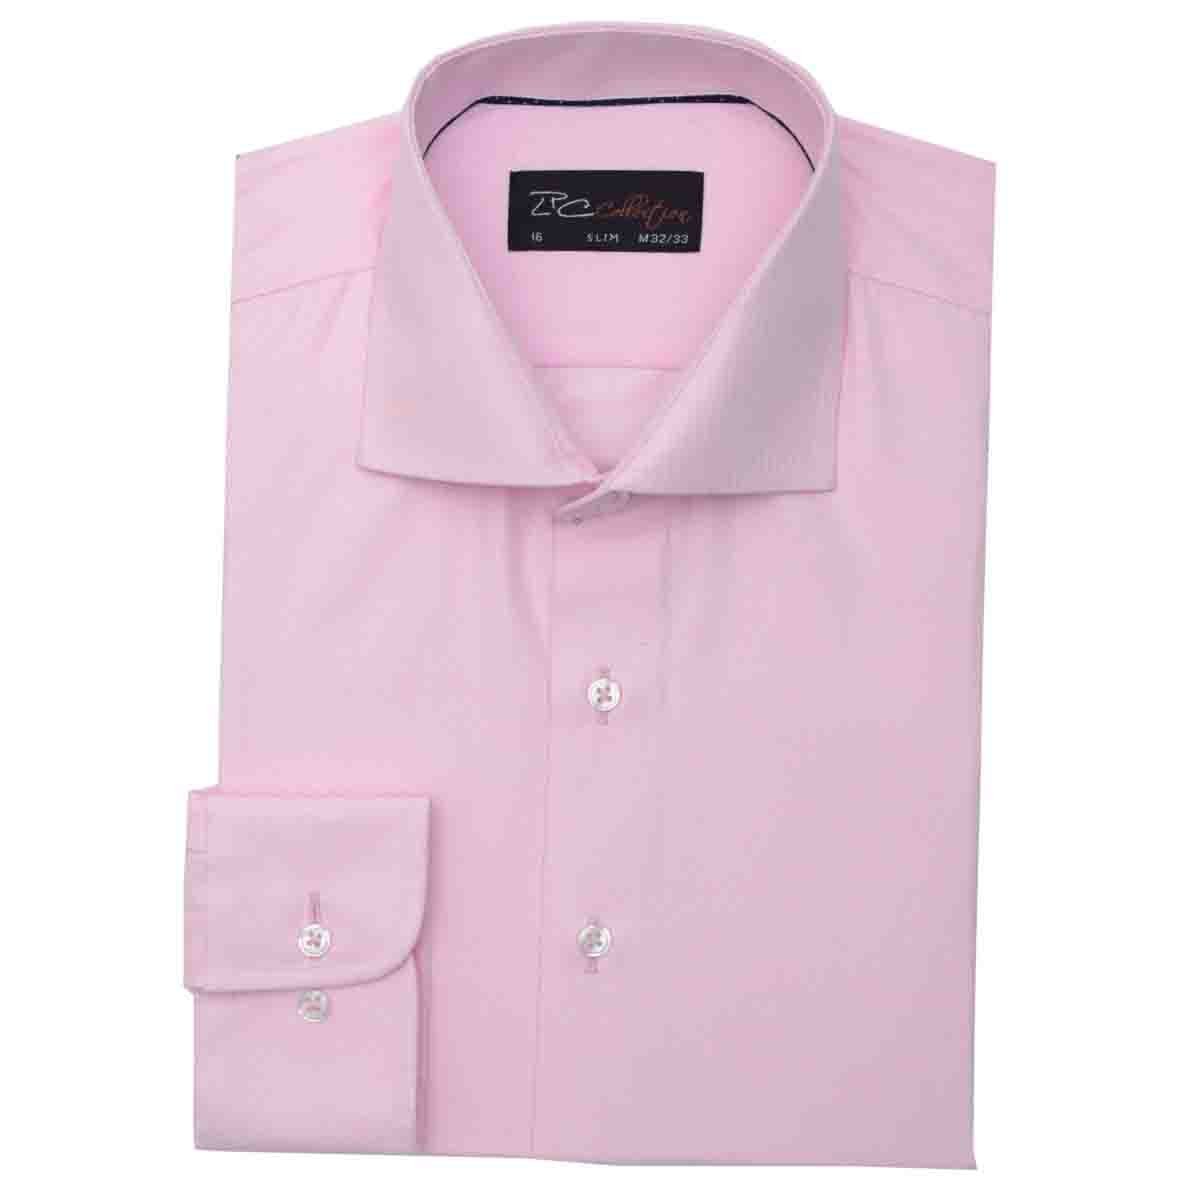 Camisa Color Rosa Bruno Magnani